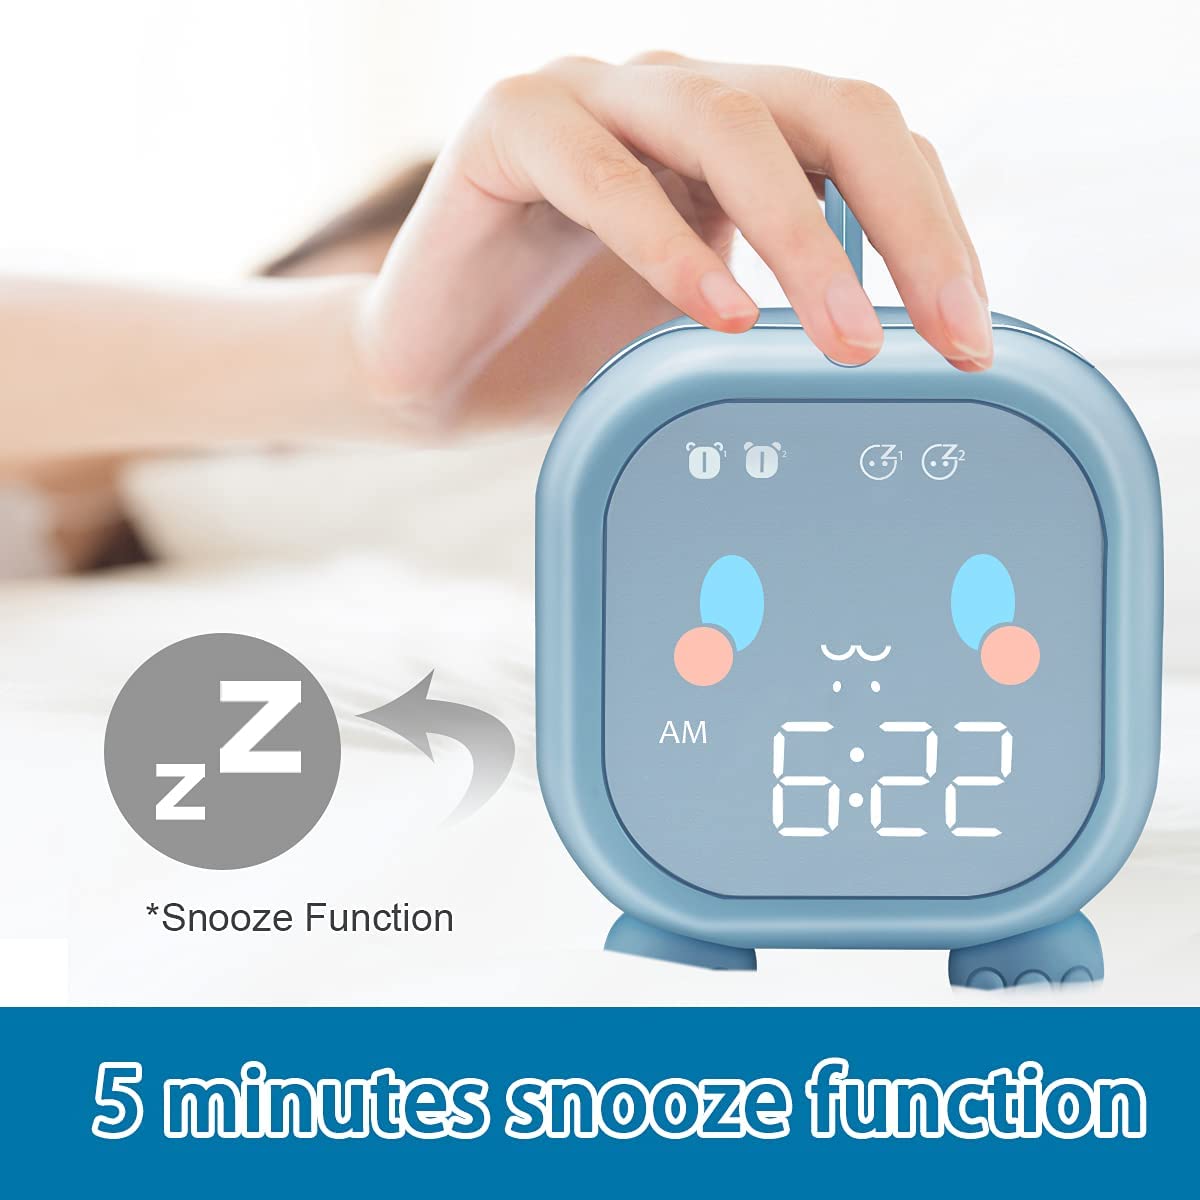 Kids Digital Alarm Clock for Kids Bedroom Cute Dinosaur (Blue)